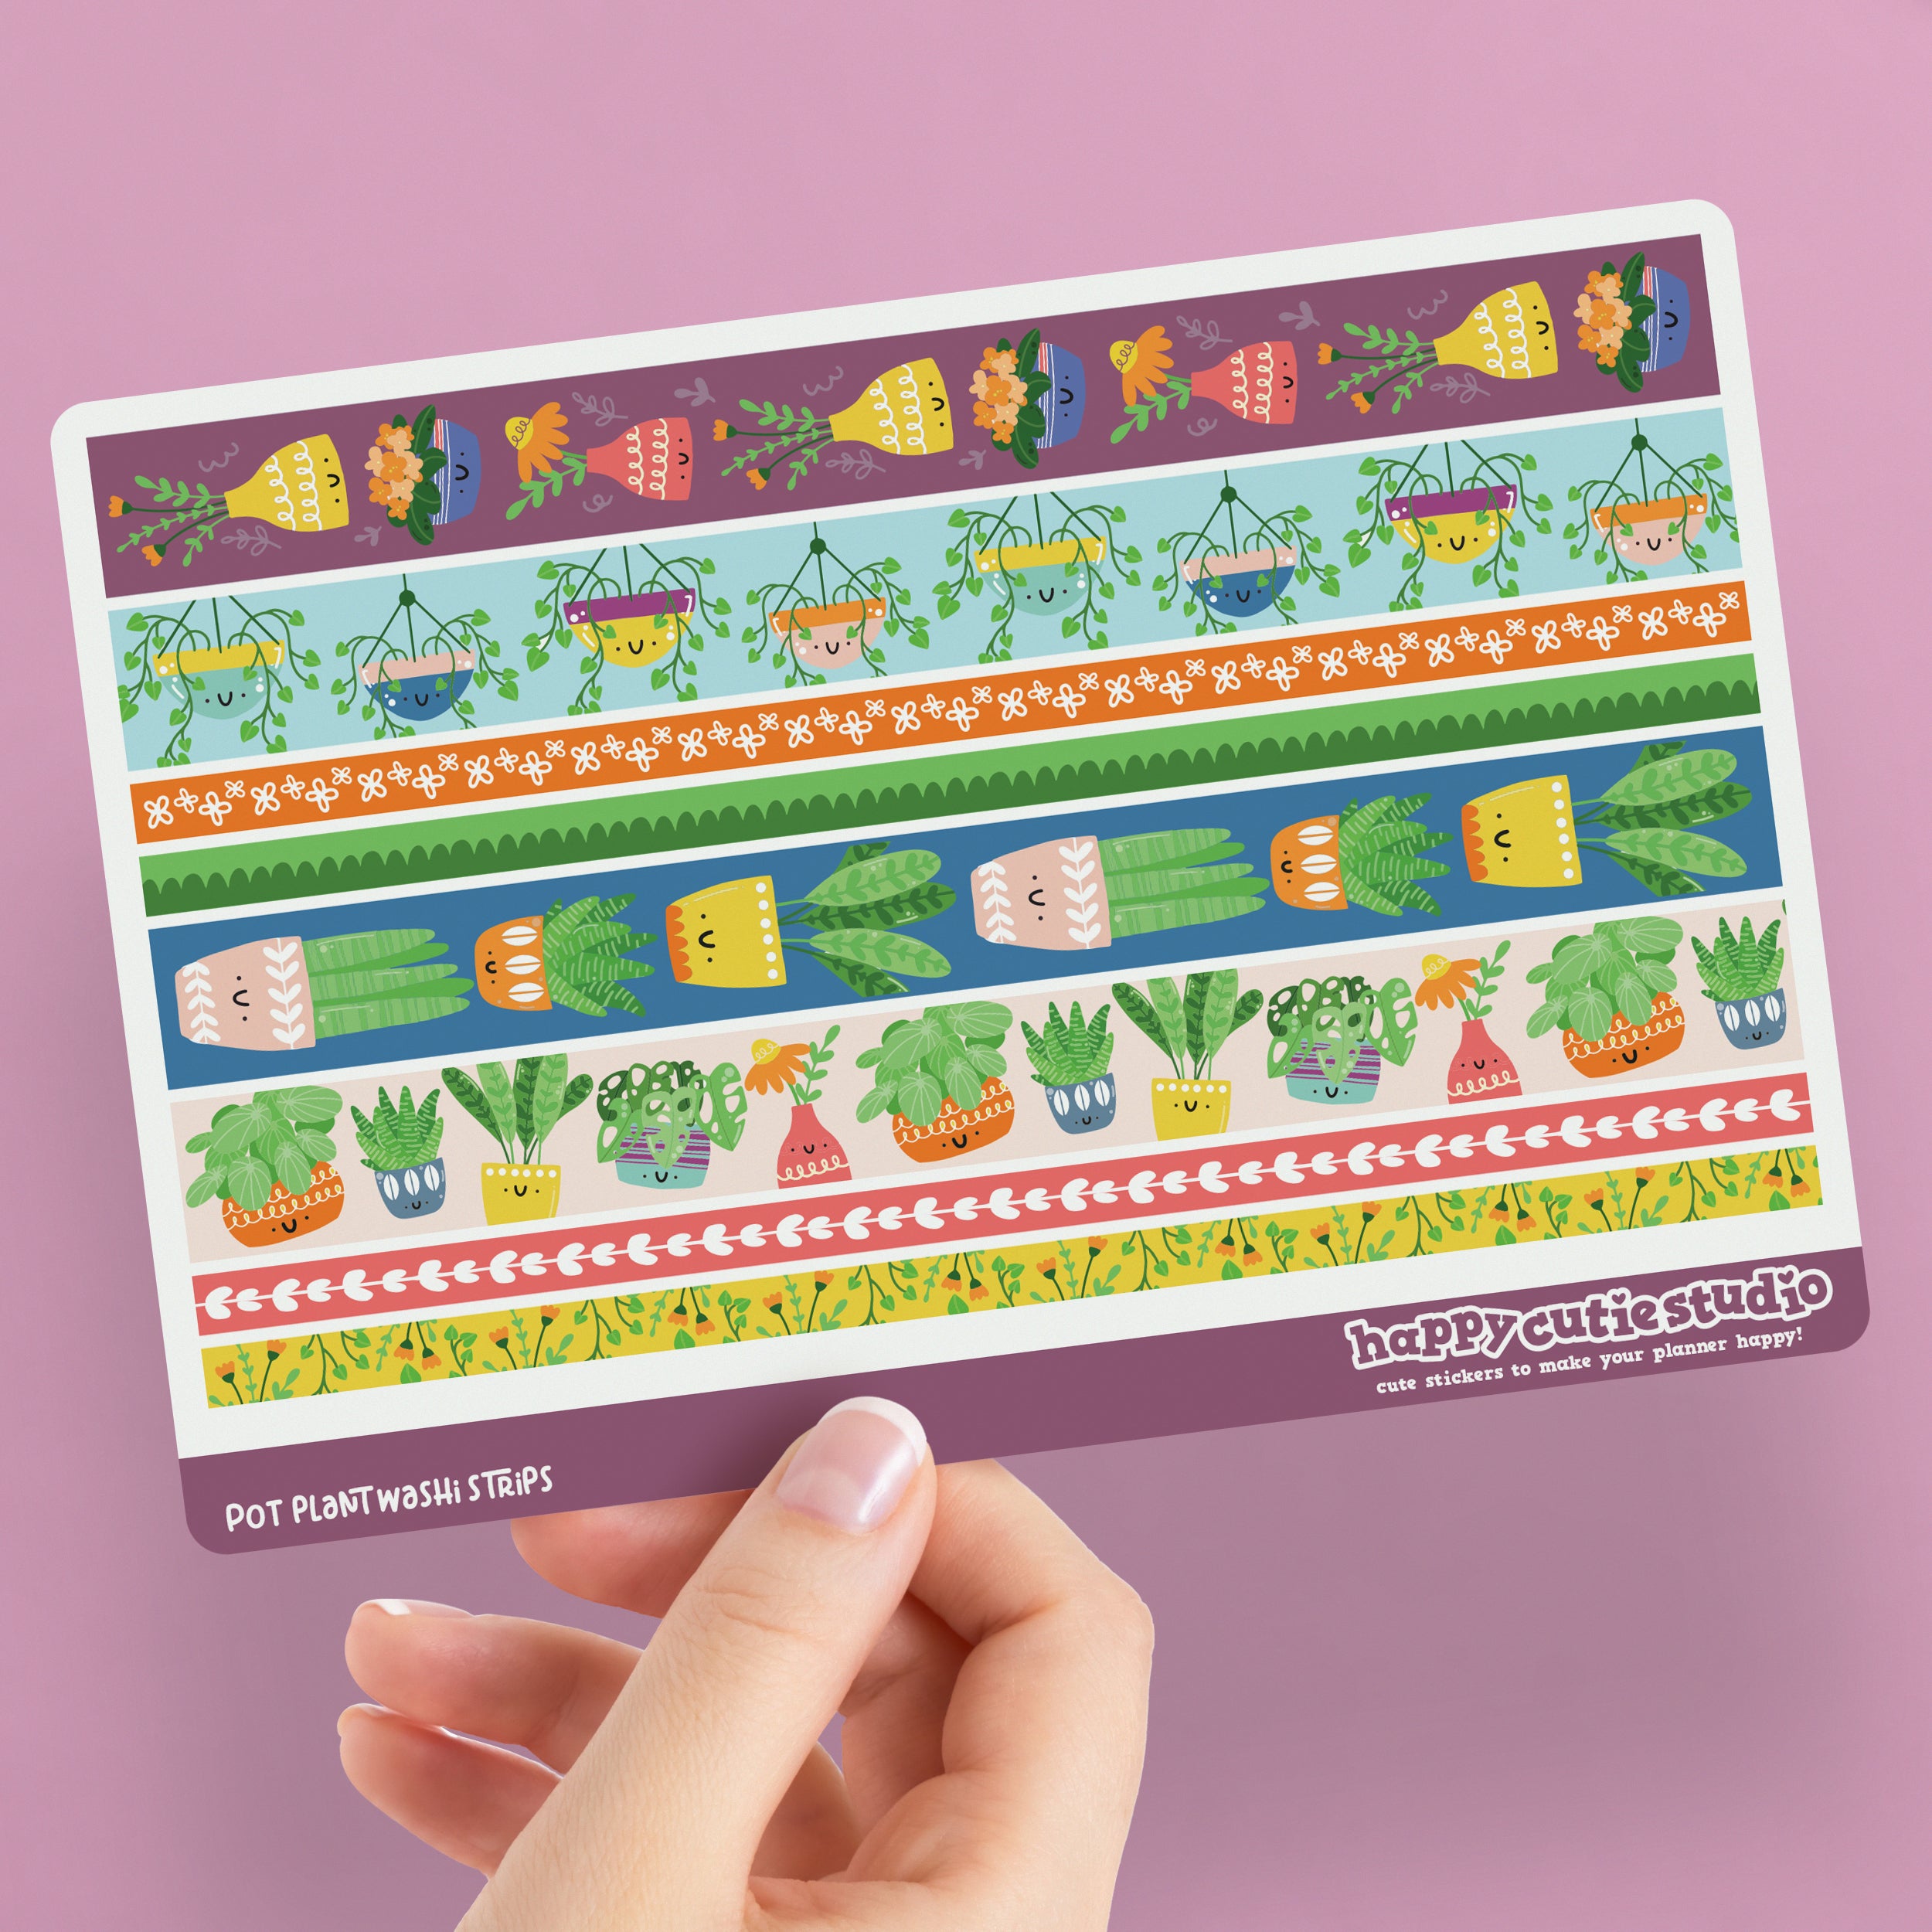 Pot Plants Washi Strip Planner Stickers